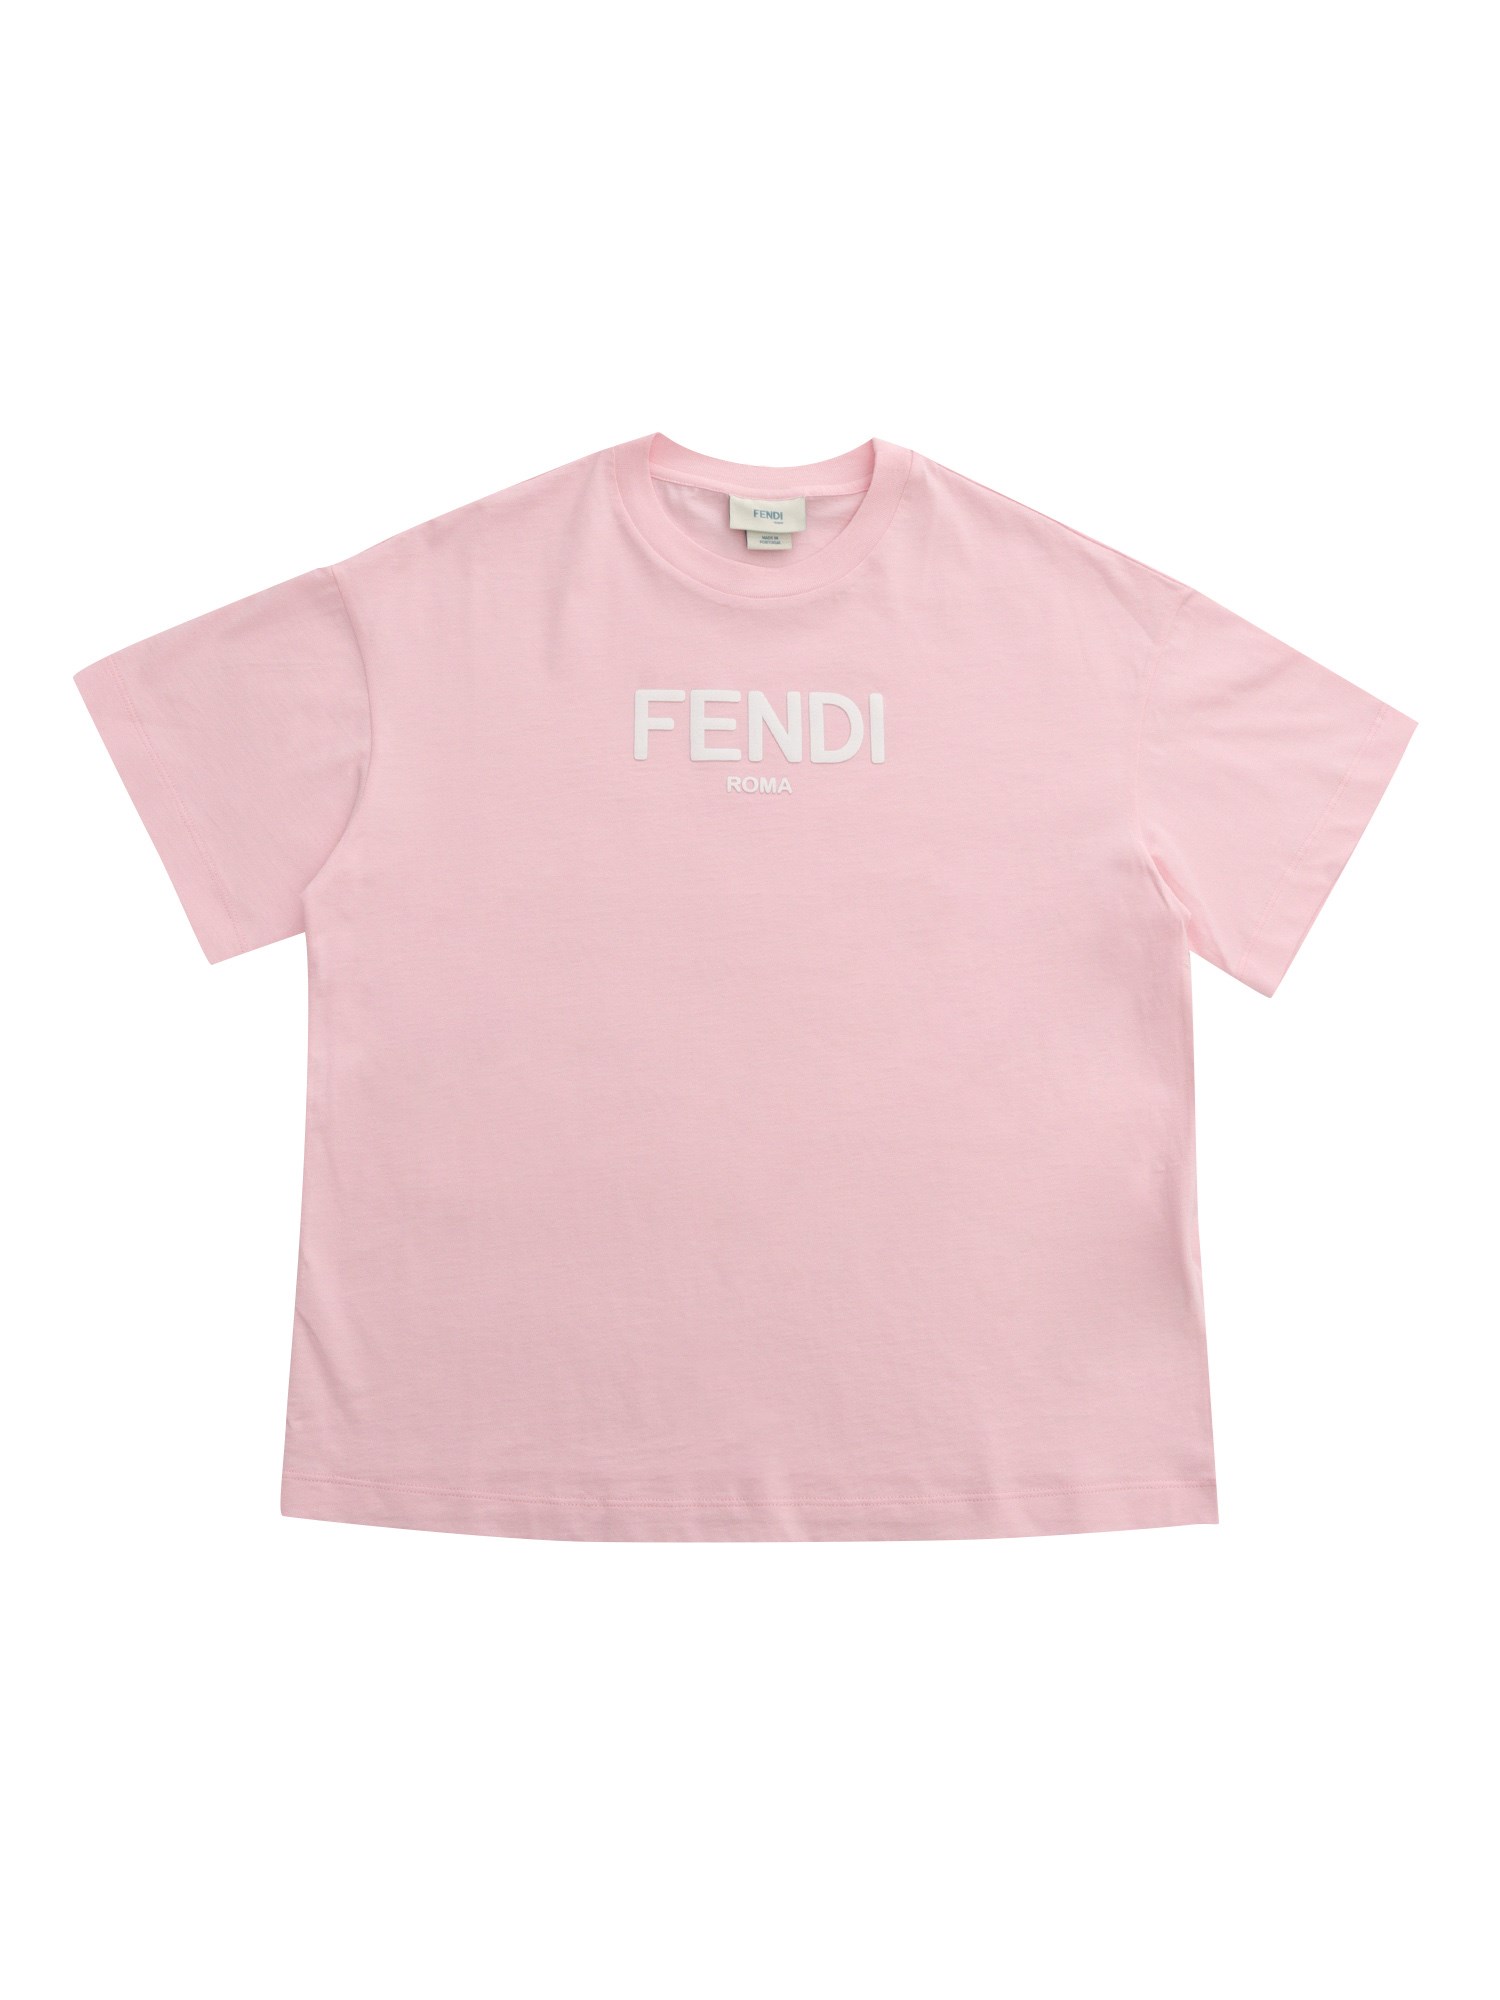 Fendi Jr Pink Fendi T-shirt